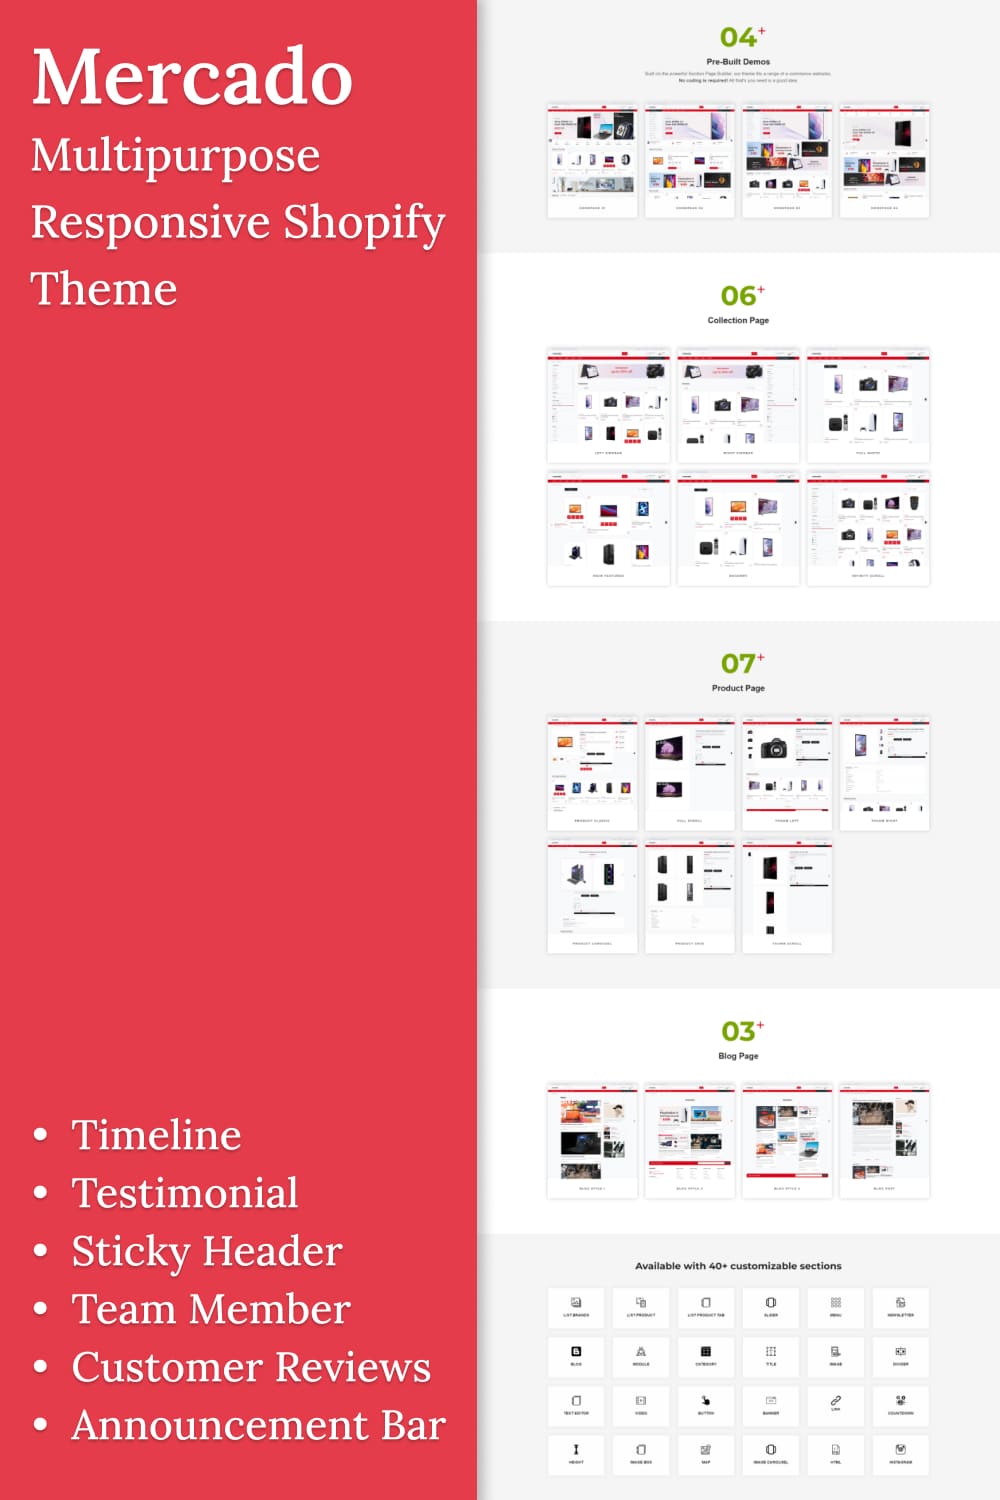 Mercado - Multipurpose Responsive Shopify Theme - Pinterest.